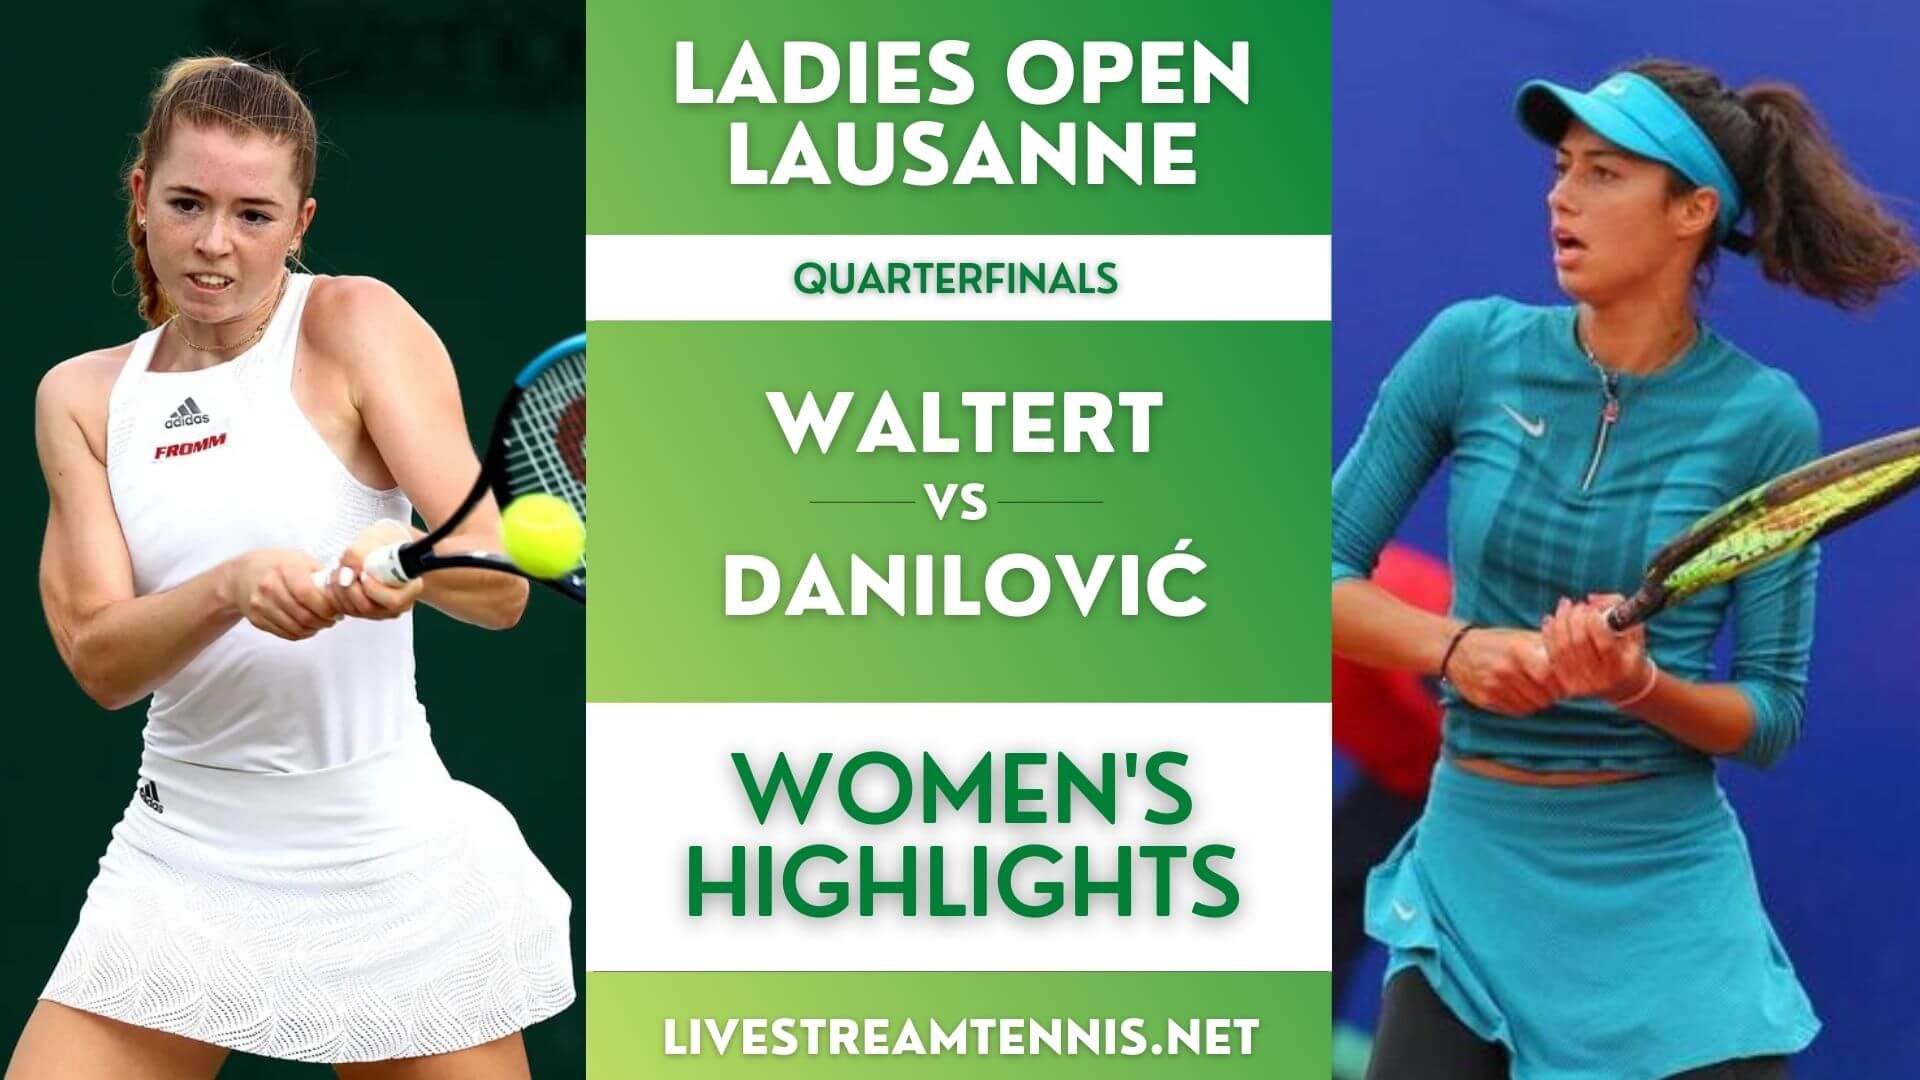 Ladies Open Lausanne Quarterfinal 3 Highlights 2022